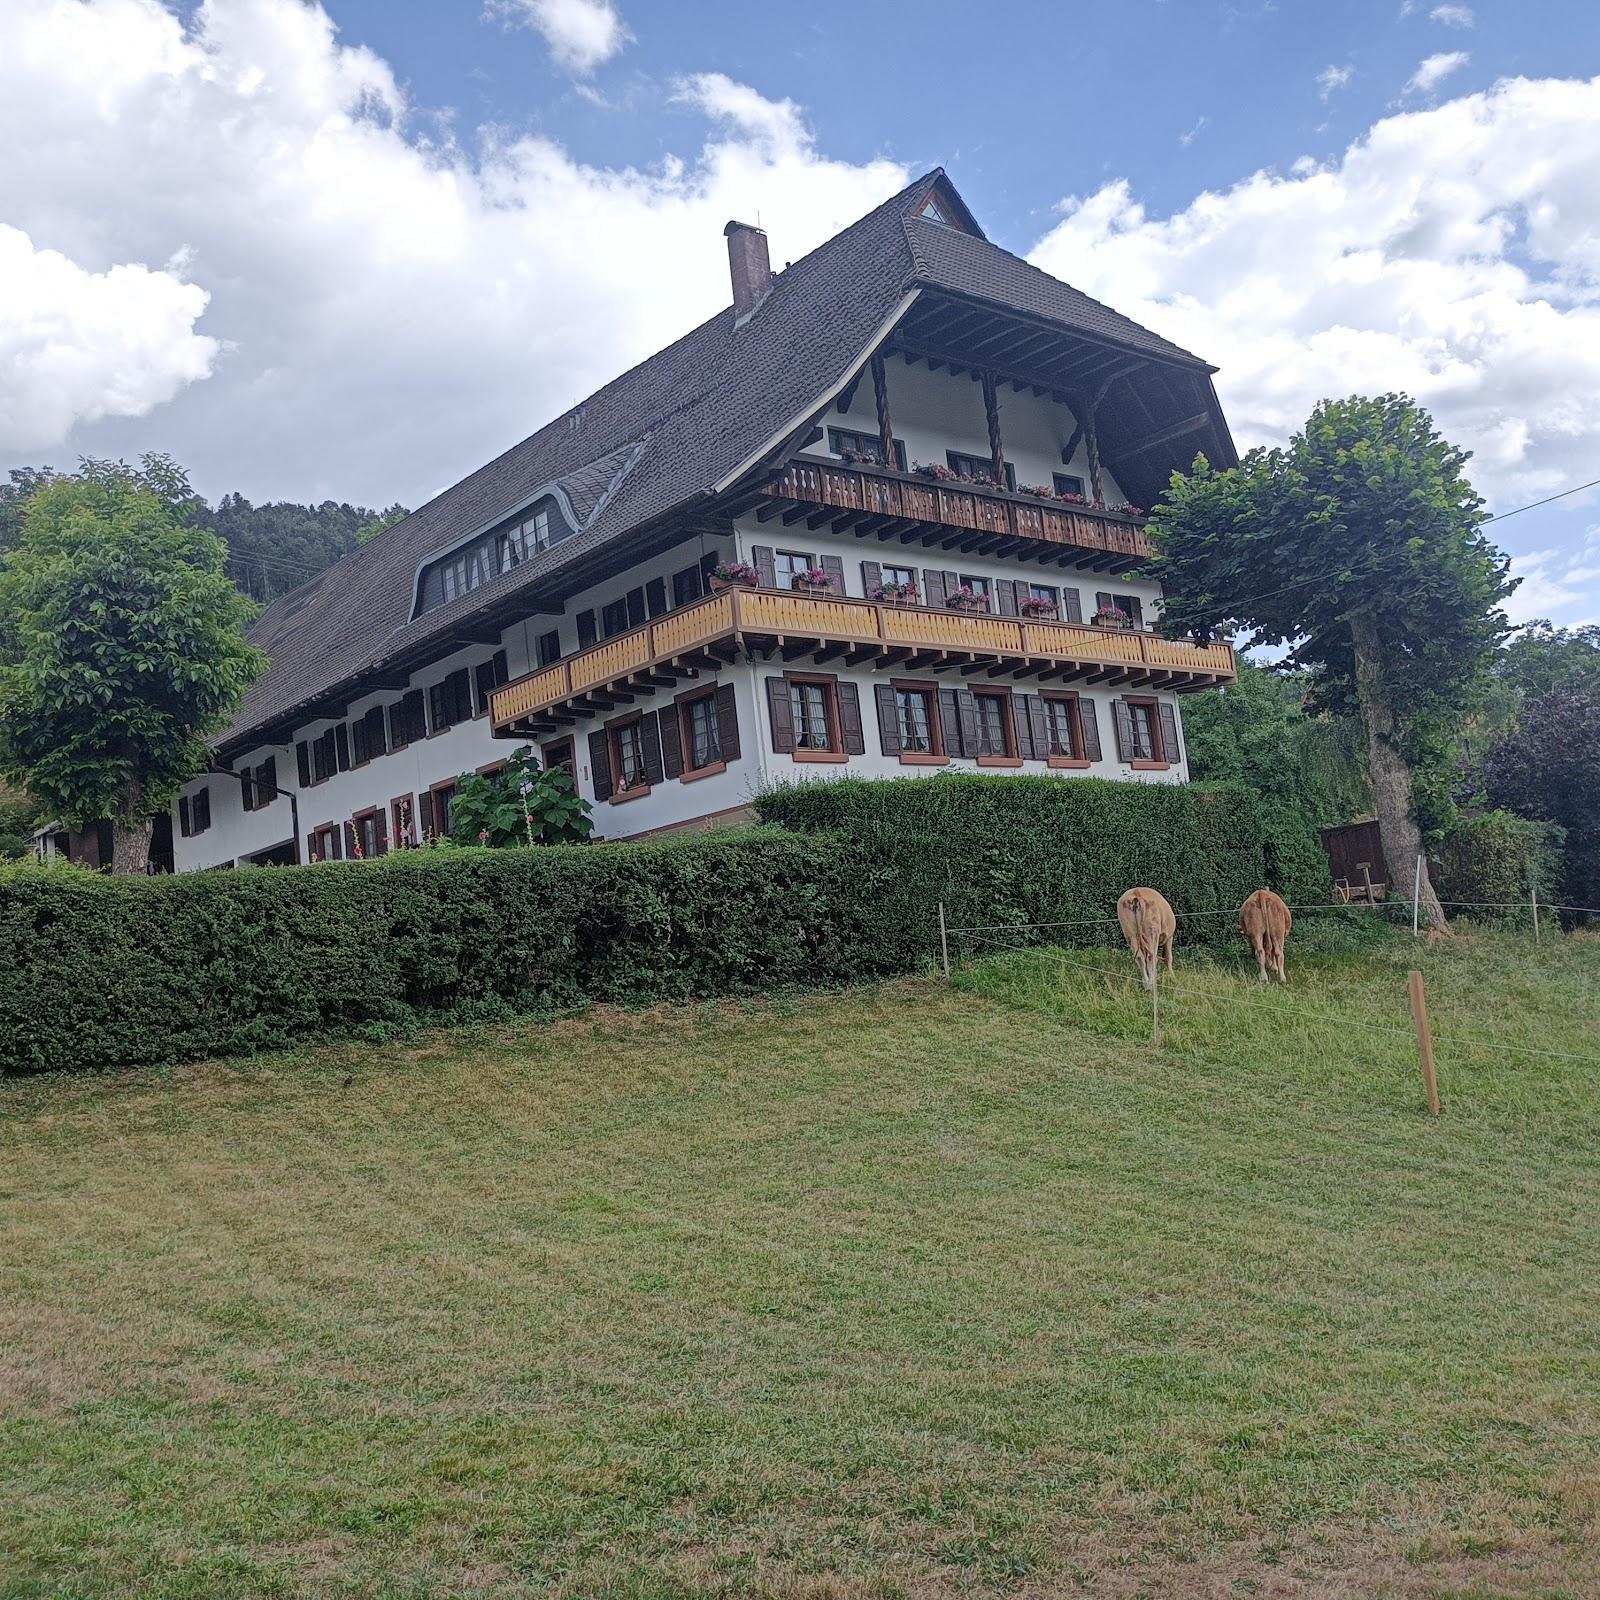 Restaurant "Pension Muserhof" in Nordrach